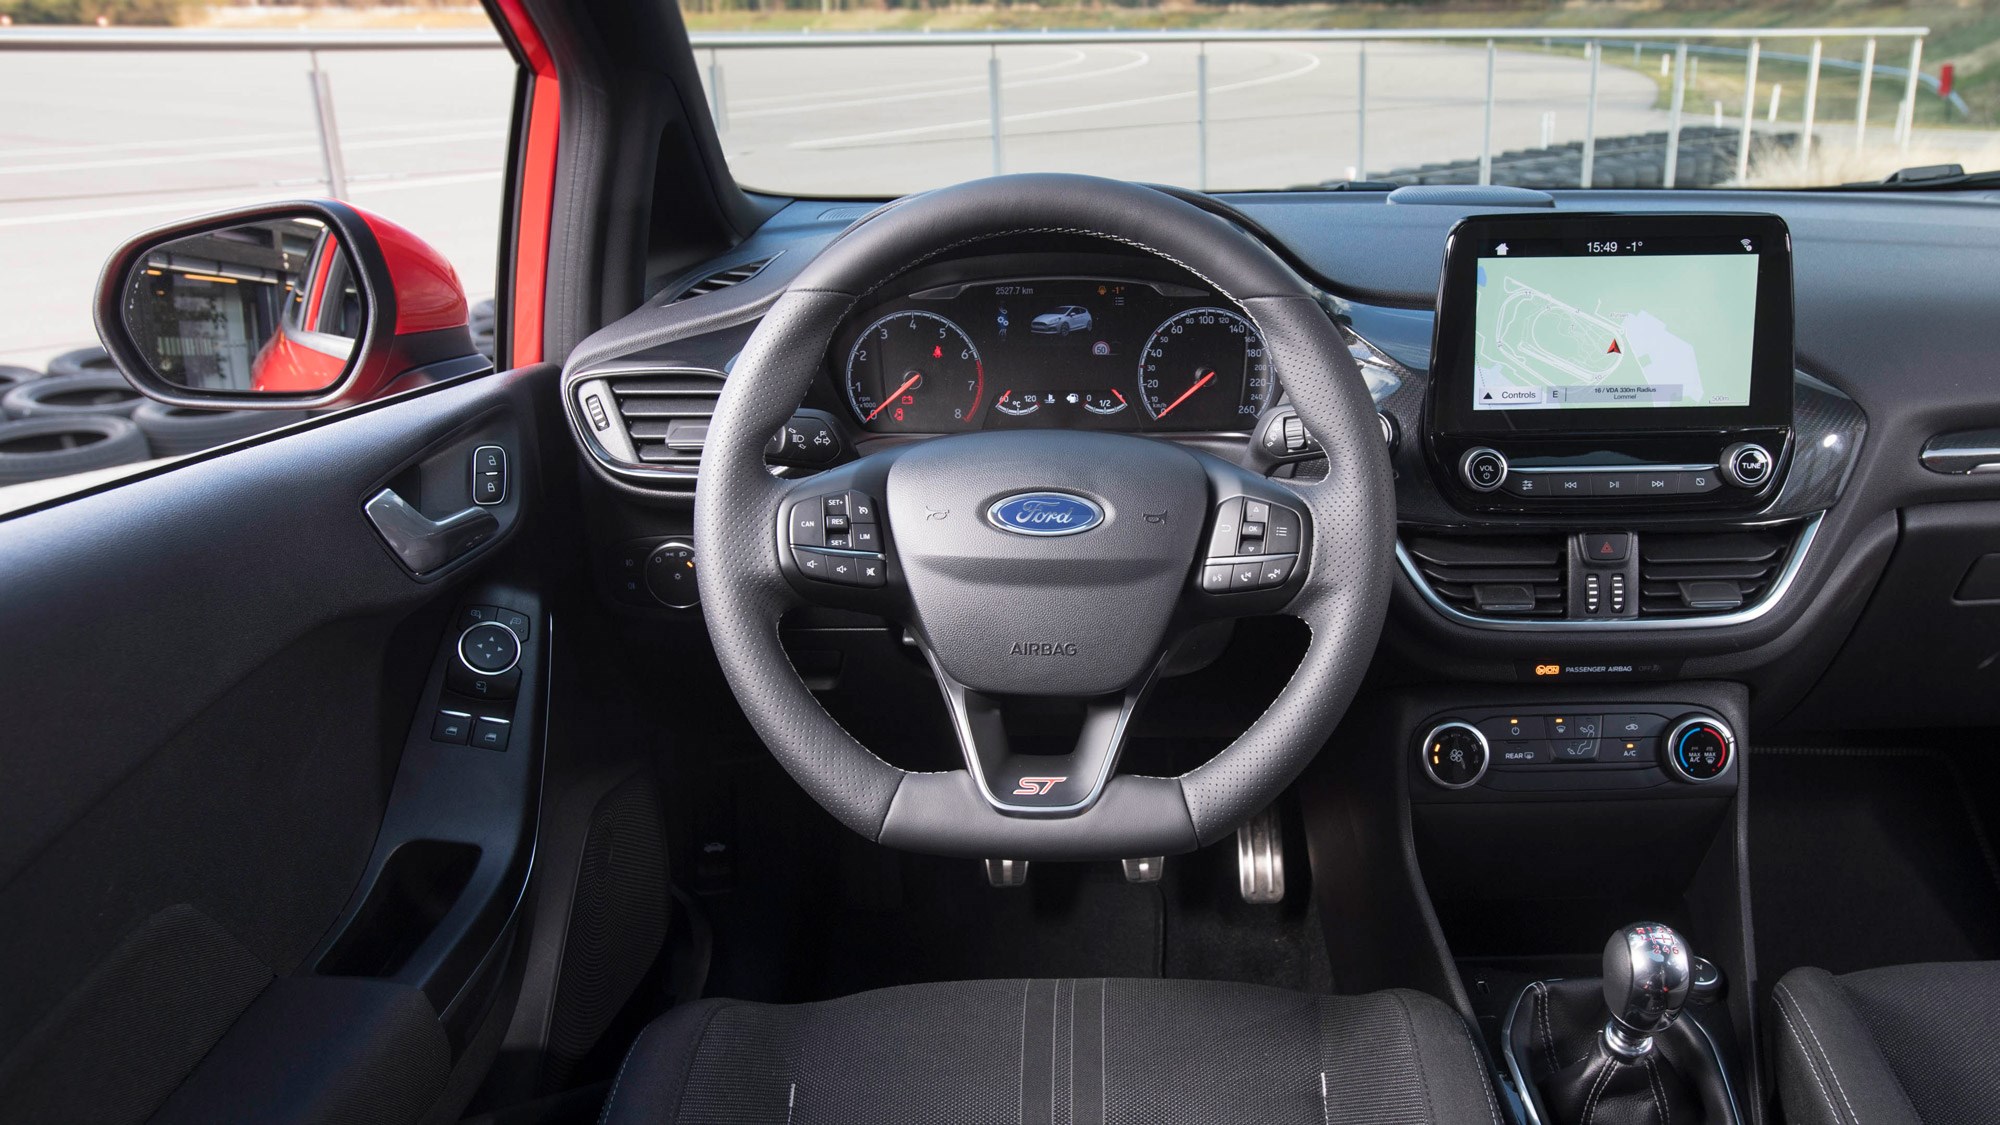 Ford Fiesta St Review 2018 A Modern Classic Hot Hatch